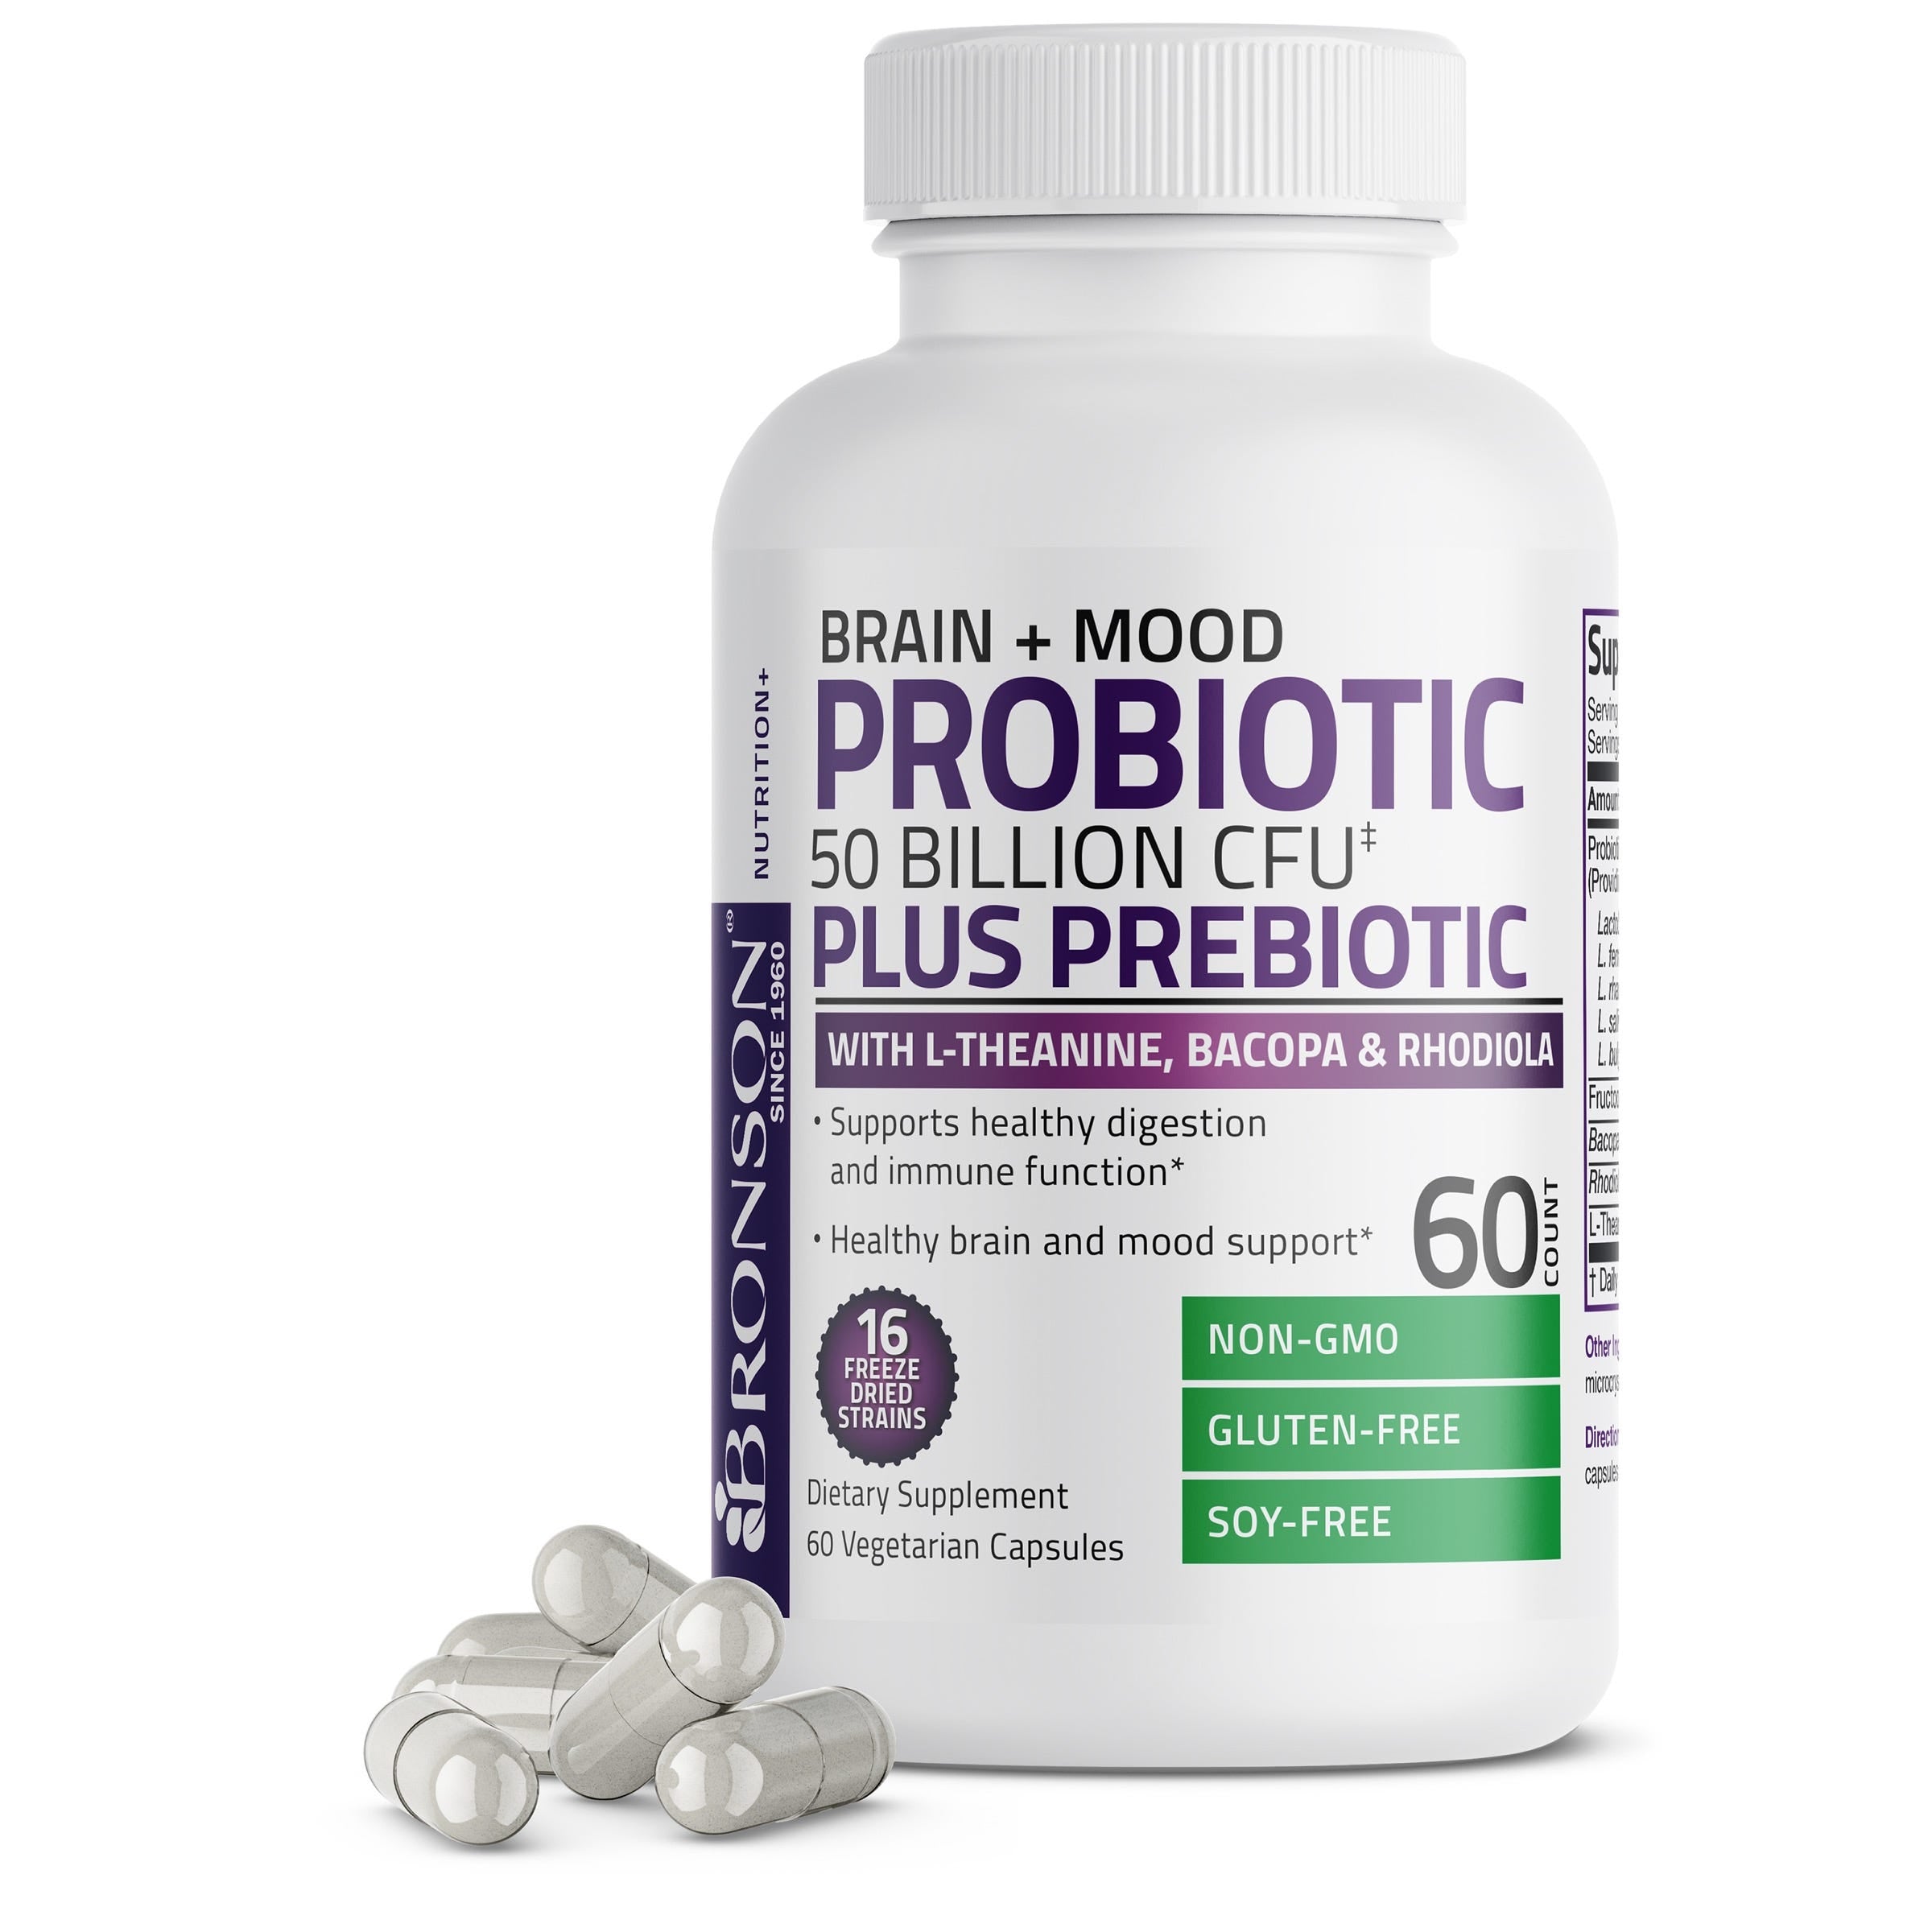 Probiotic Plus Prebiotic with L-Theanine, Bacopa & Rhodiola - 50 Billion CFU - 60 Vegetarian Capsules view 3 of 7